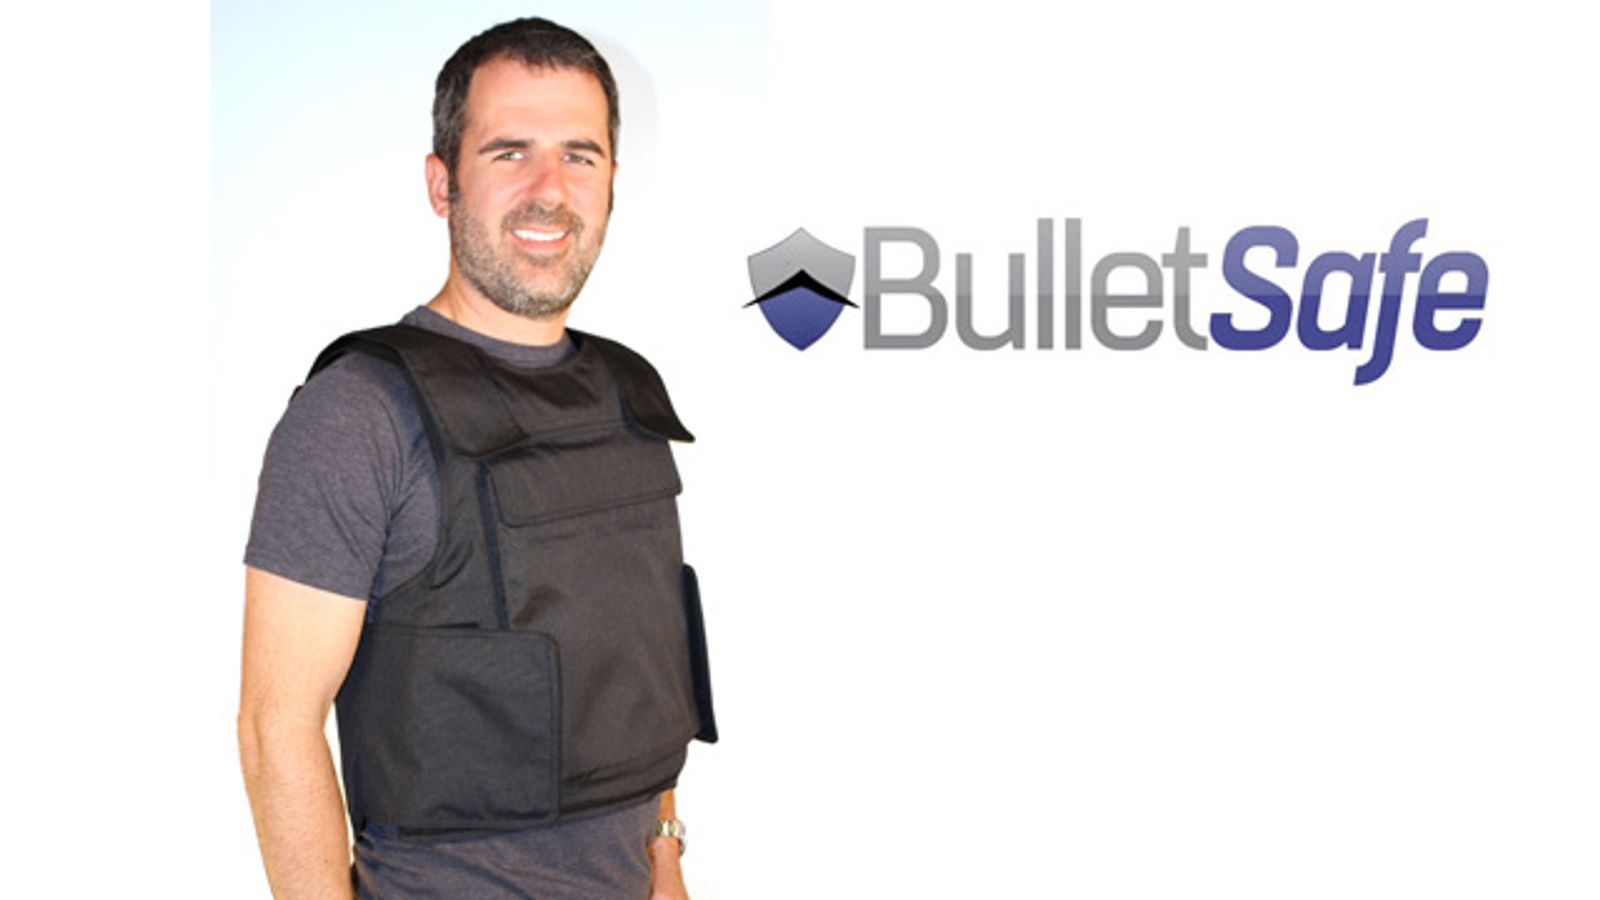 PriveCo’s Tom Nardone: From Bullet Vibes to Bulletproof Vests